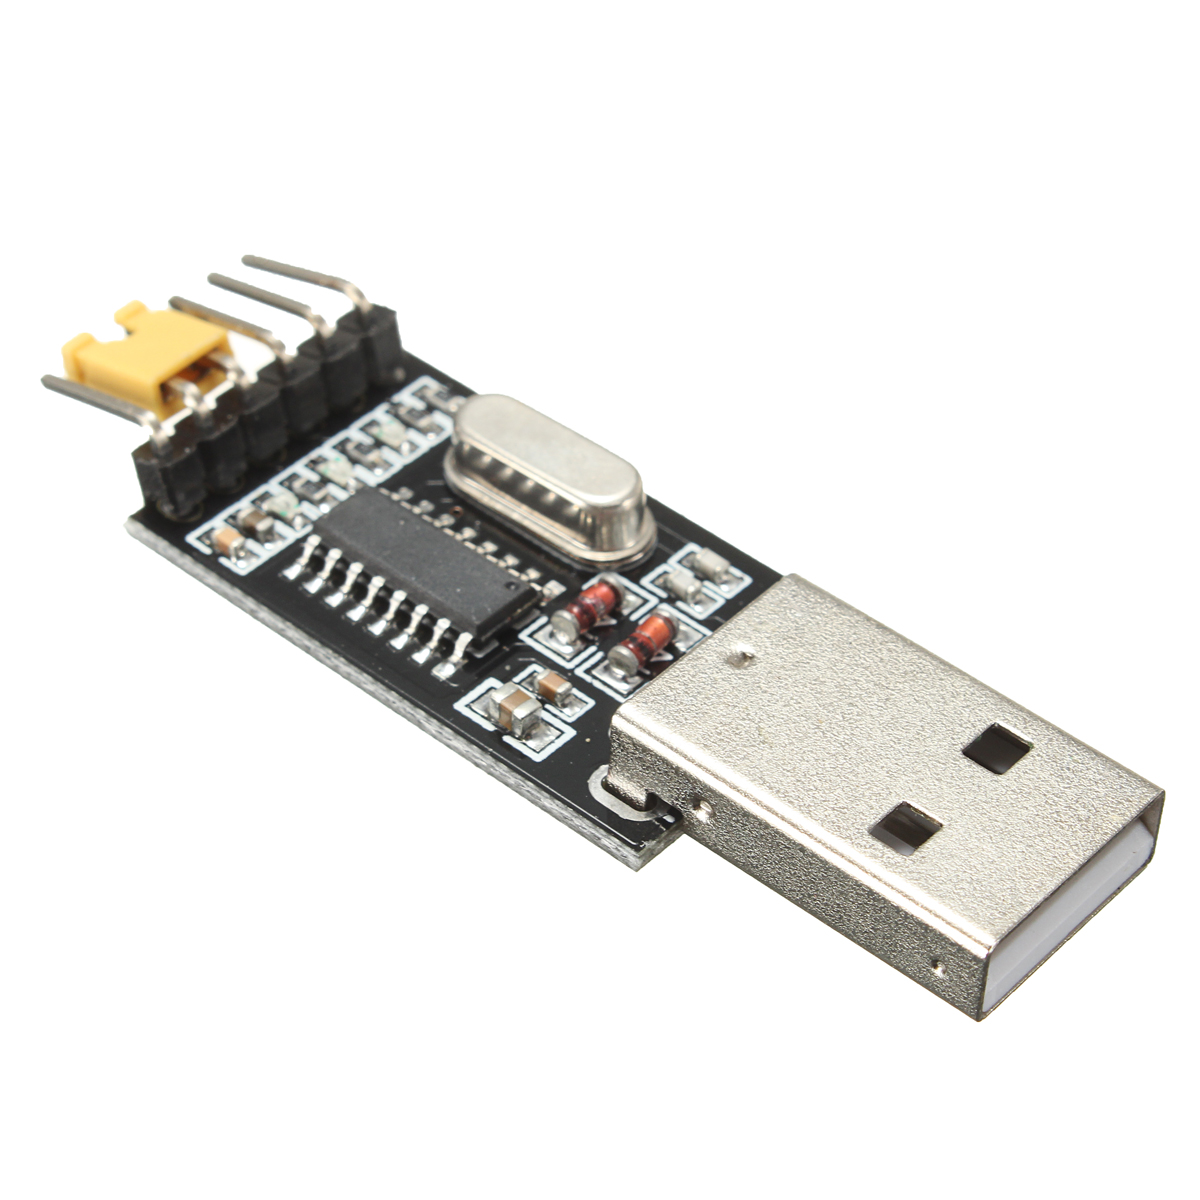 10pcs-33V-5V-USB-to-TTL-Converter-CH340G-UART-Serial-Adapter-Module-STC-1314967-2